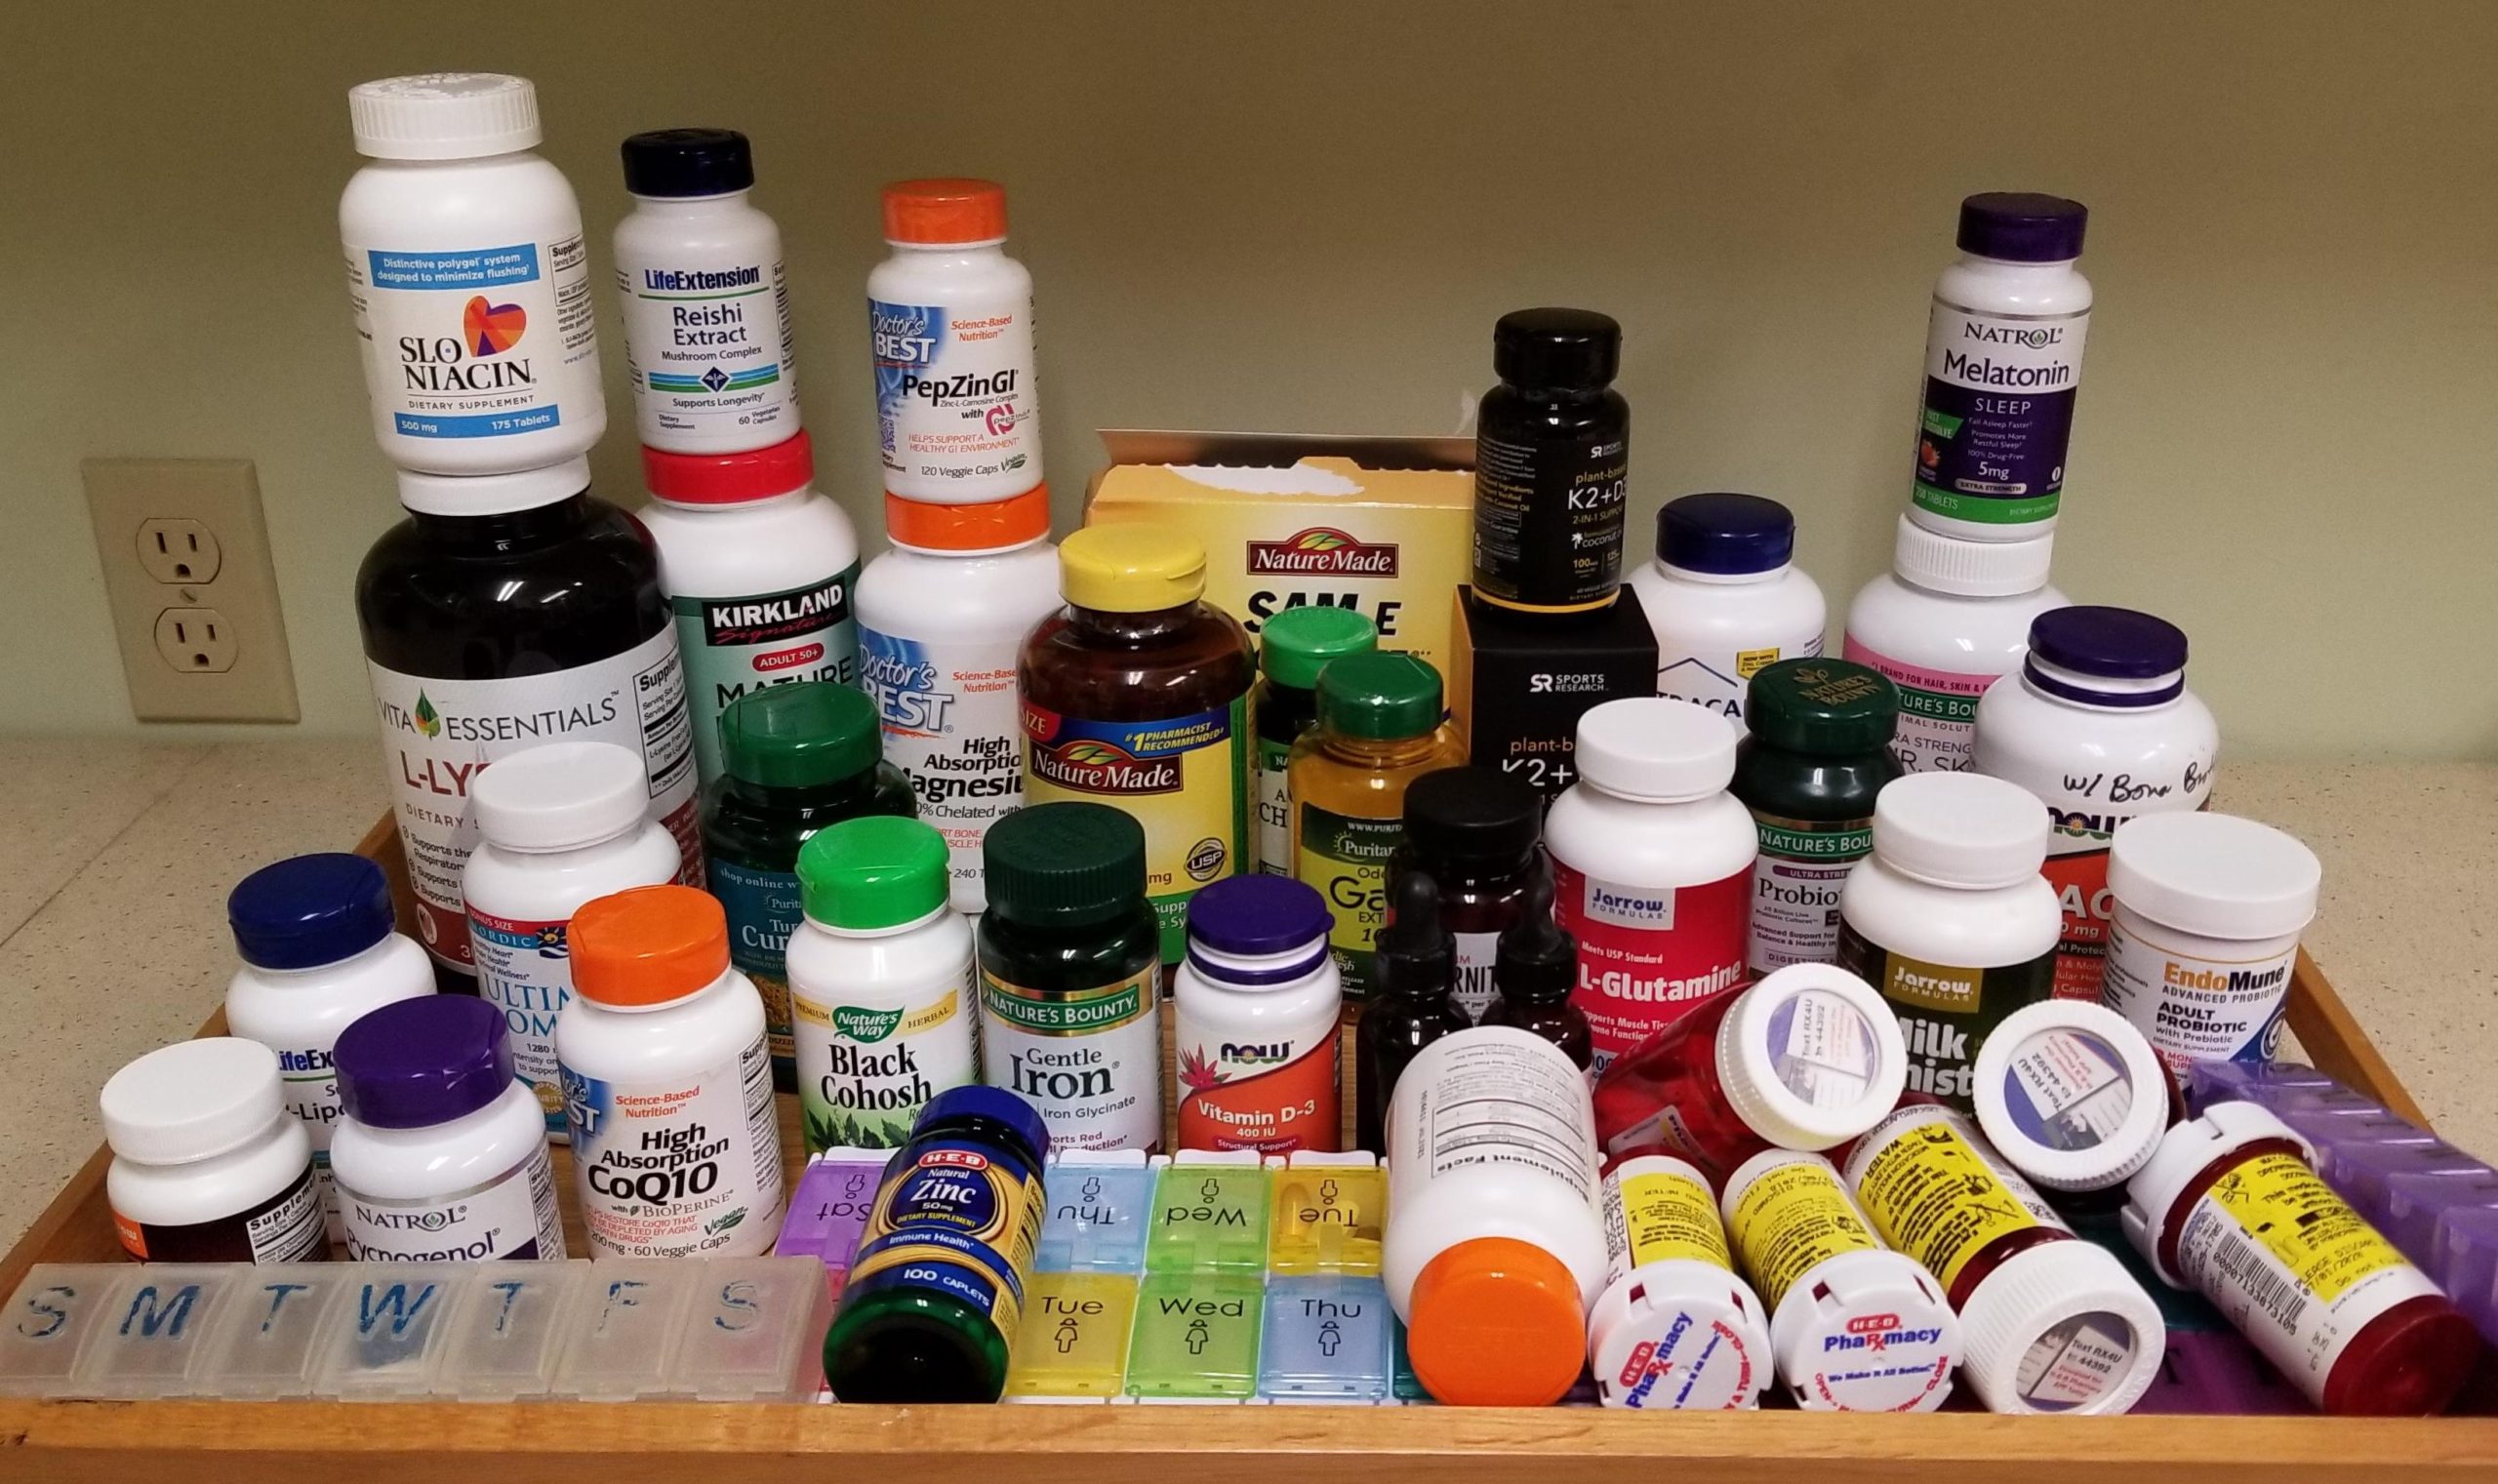 Large quantity of supplements taken for autoimmune condition